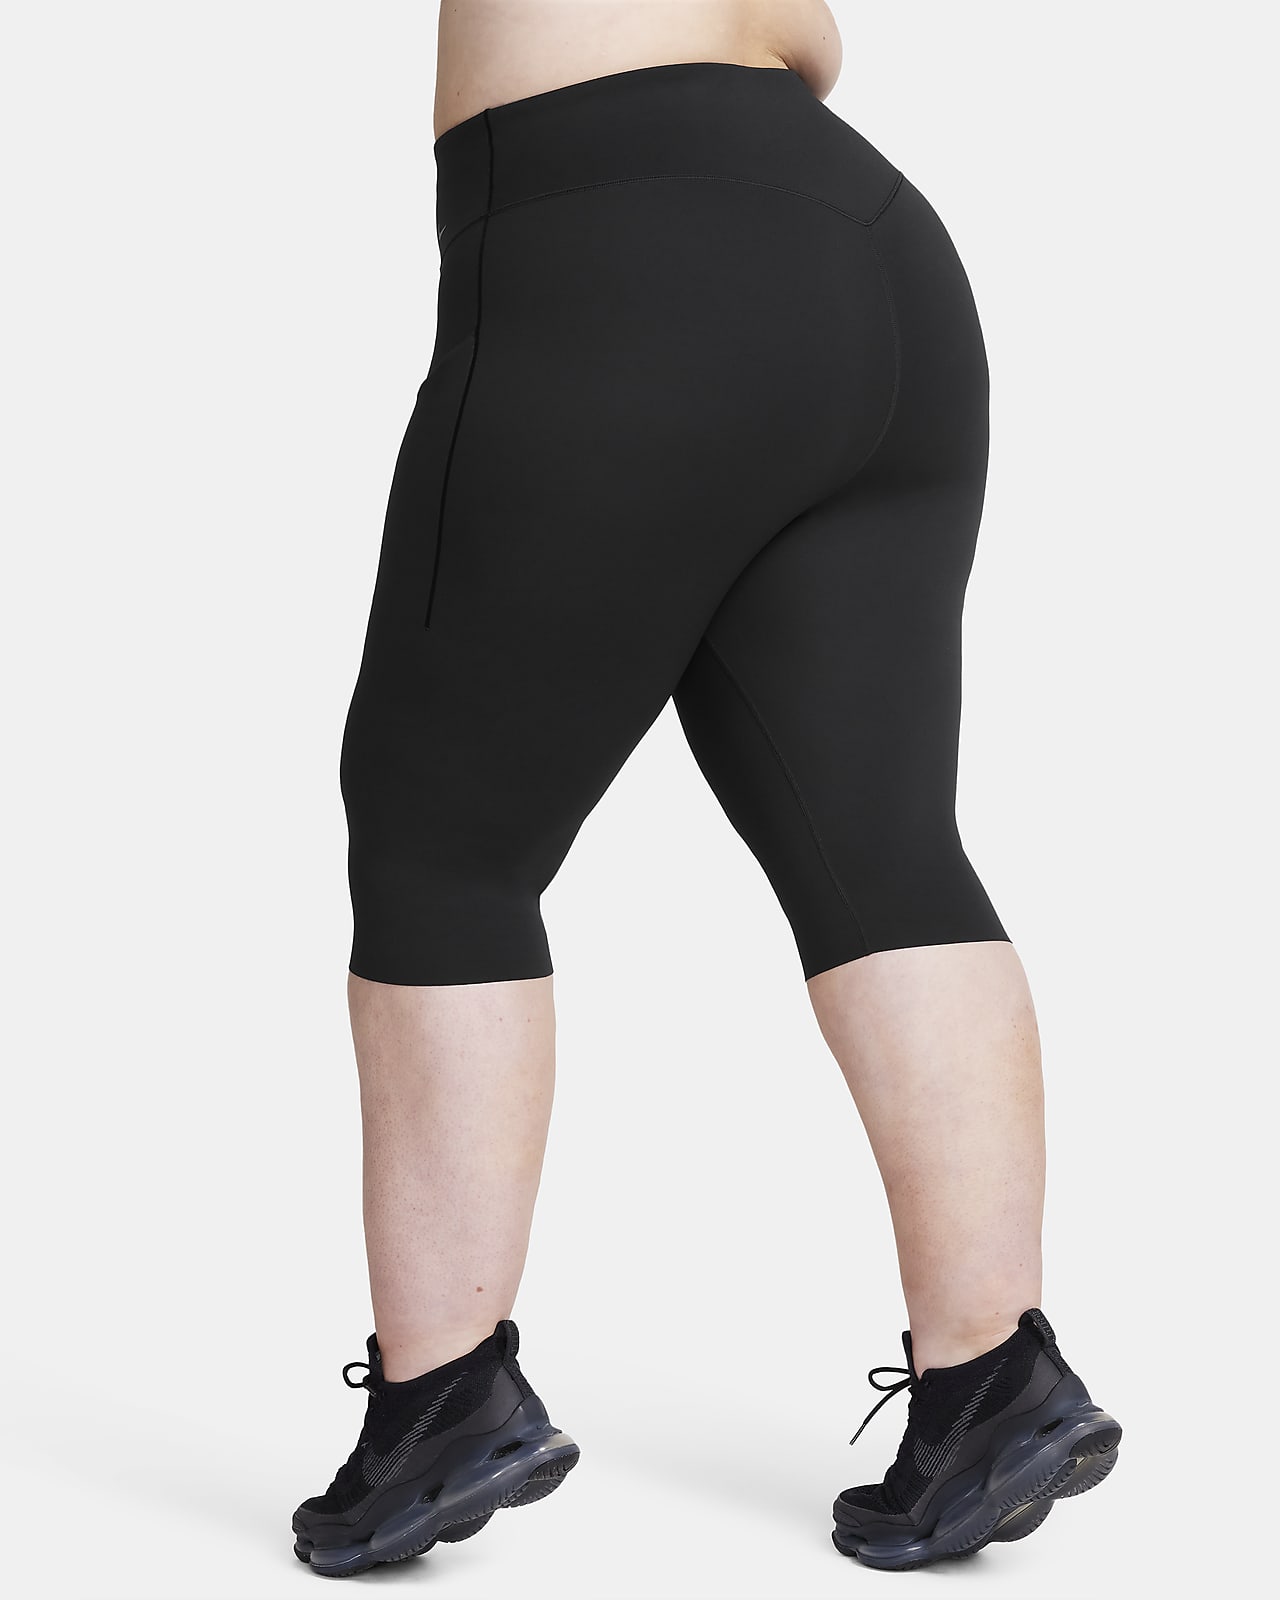 universa womens medium support high waisted capri leggings with pockets plus size 4qZS67